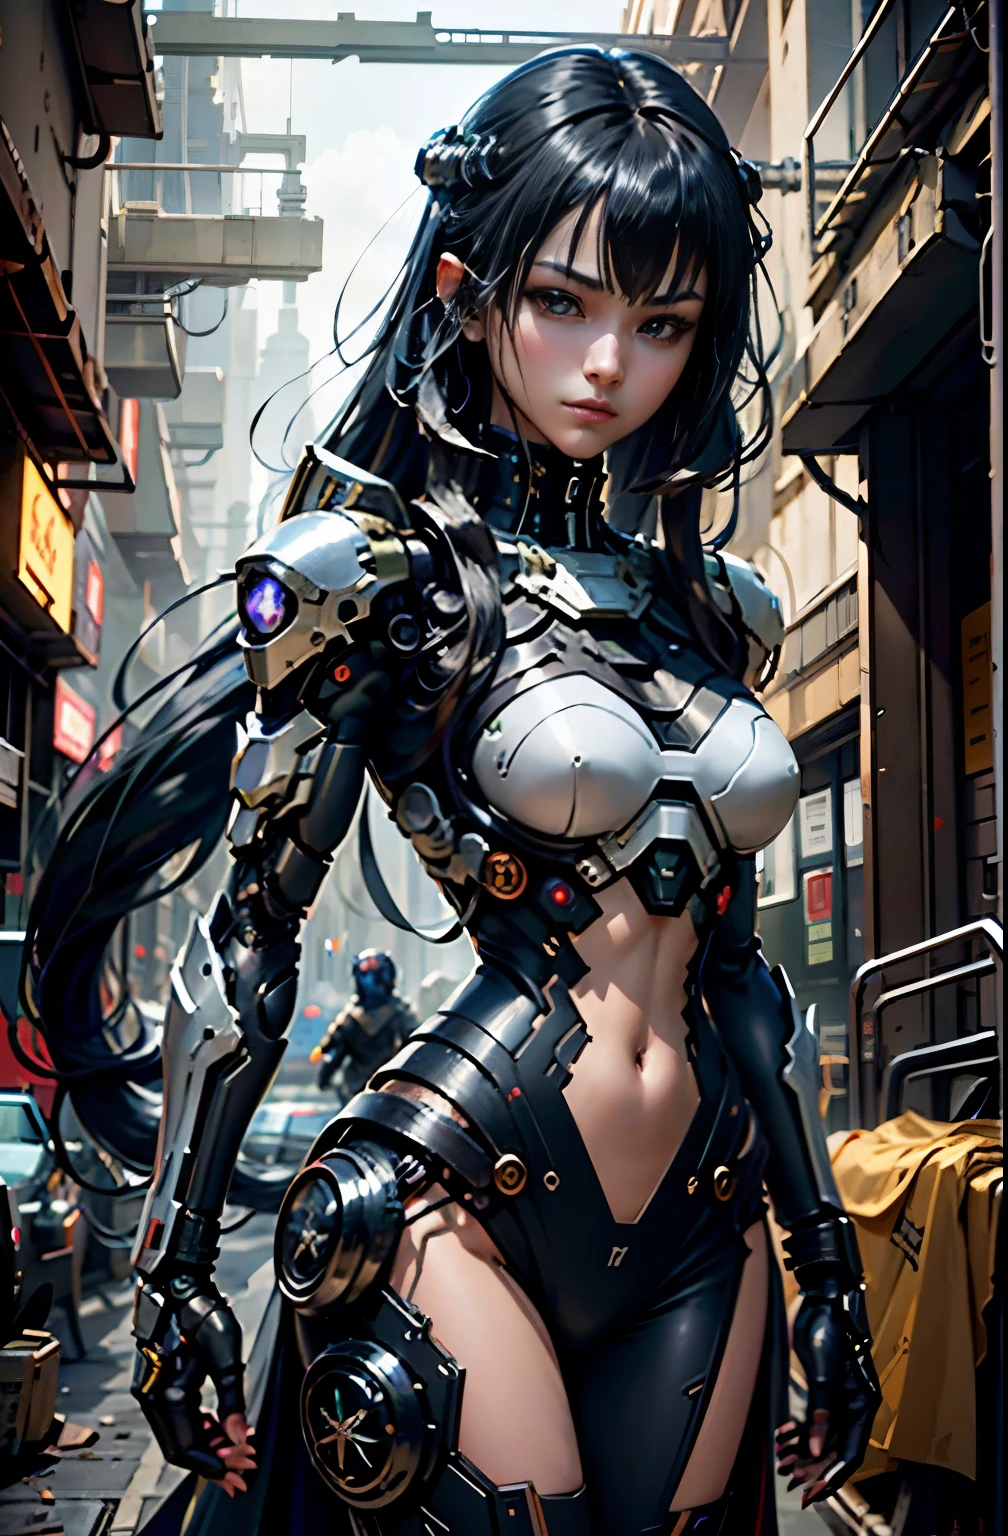 Fantasy、Black hair color、Super Long Hair、cyberpunked、(Double Sword、Scorpion Cyborg Woman、Das Veilchen:1.1)、1 woman、Mechanical technology、Robot Presence、Ninja-like fighting stance、Cybernetic Guardian、